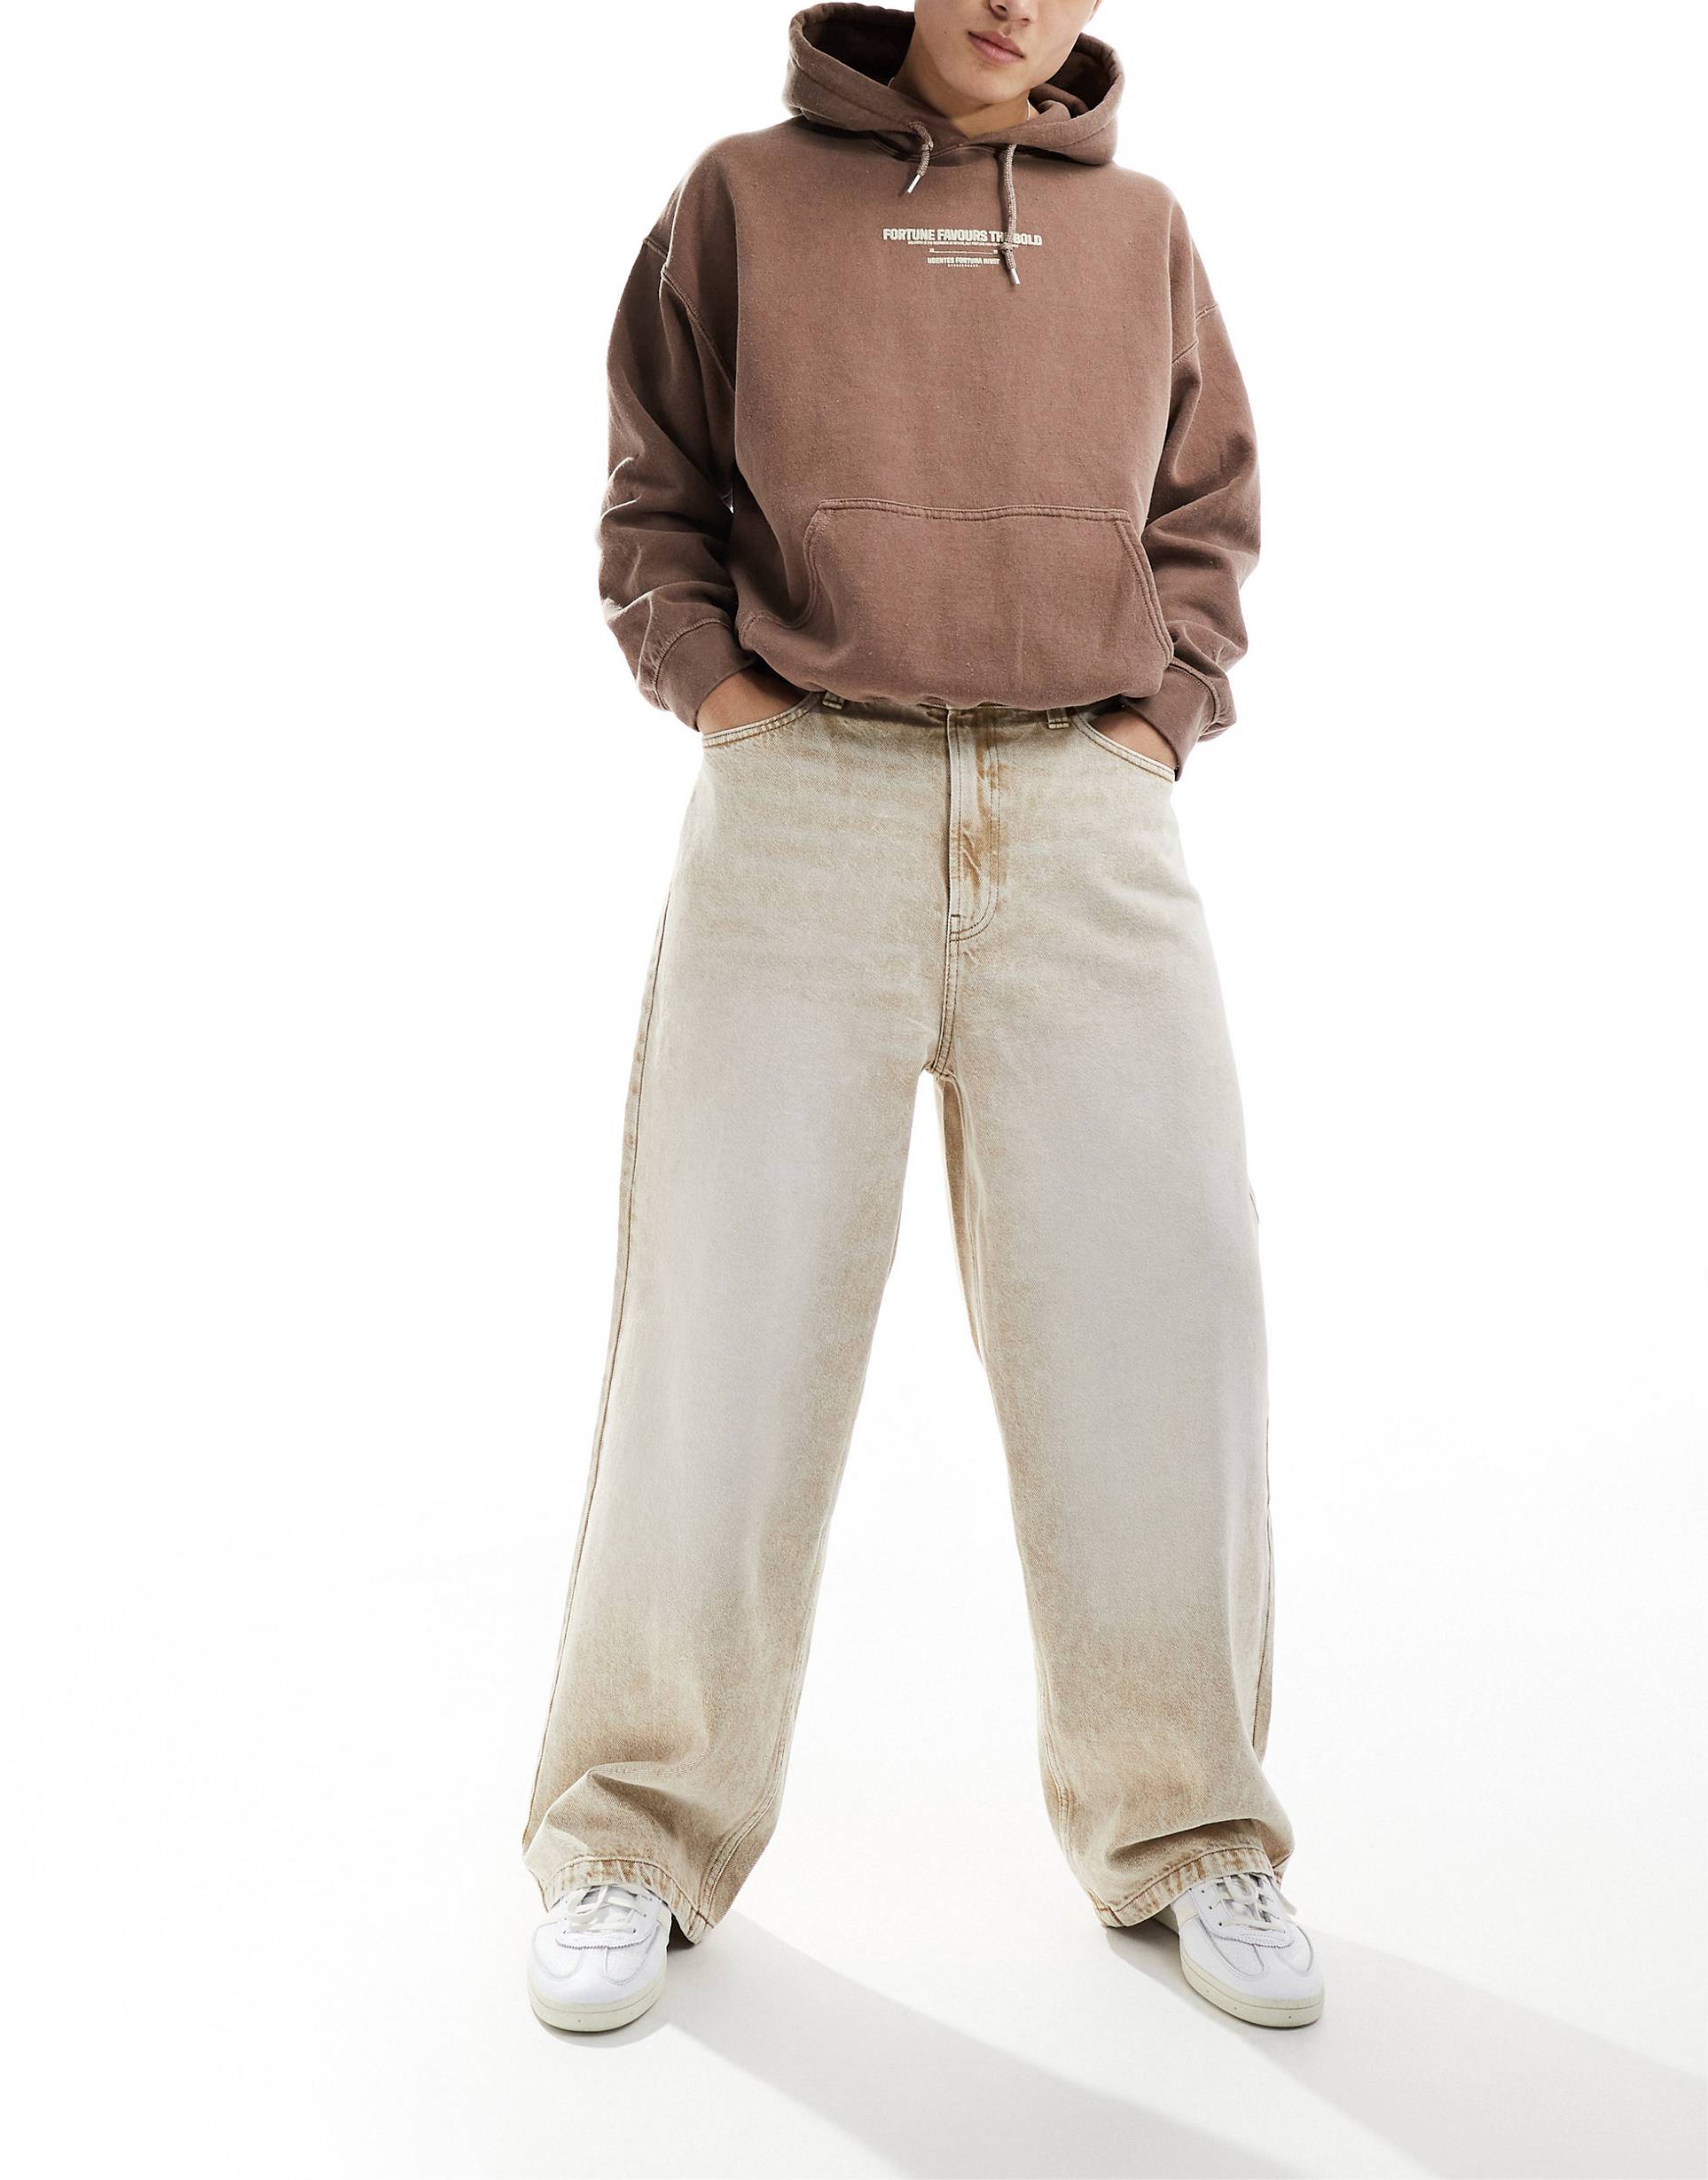 Джинсы Bershka Skater Fit Casted, бежевый джинсы bershka зауженные 42 размер новые